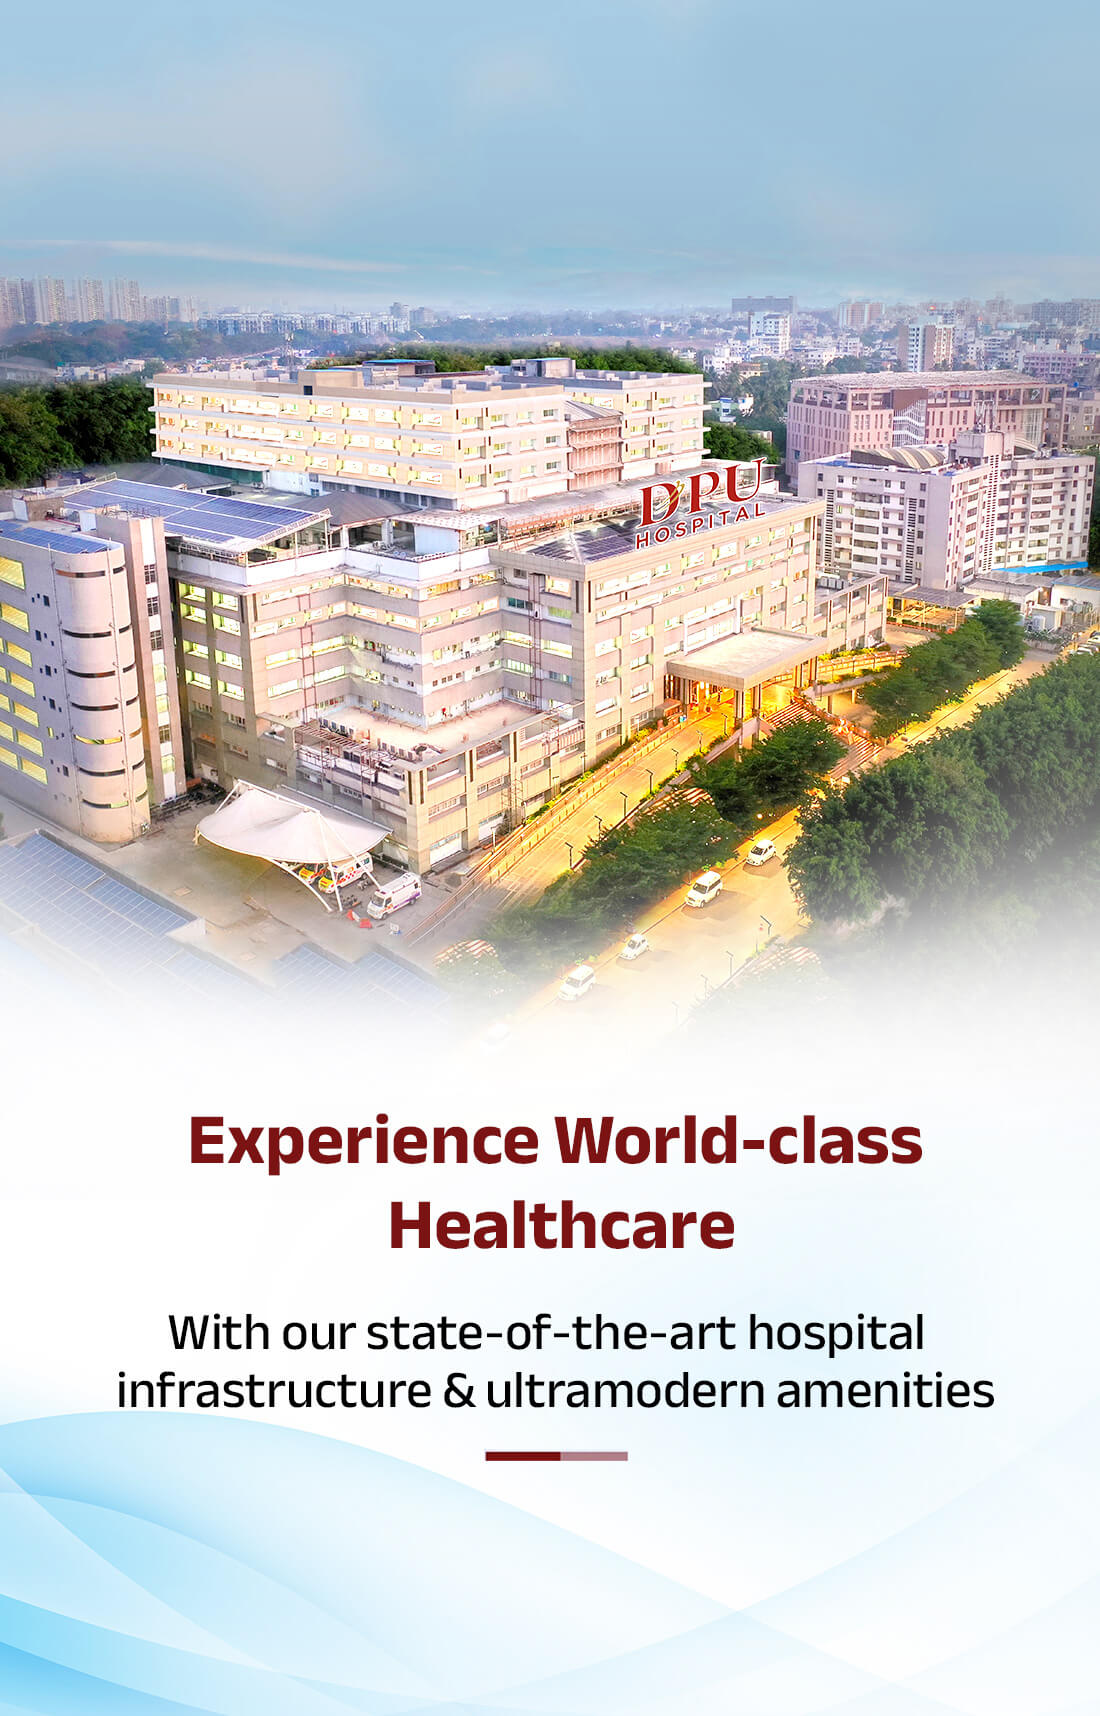 DPU - Best Multispecialty Hospital in Pune and Pimpri Chinchwad